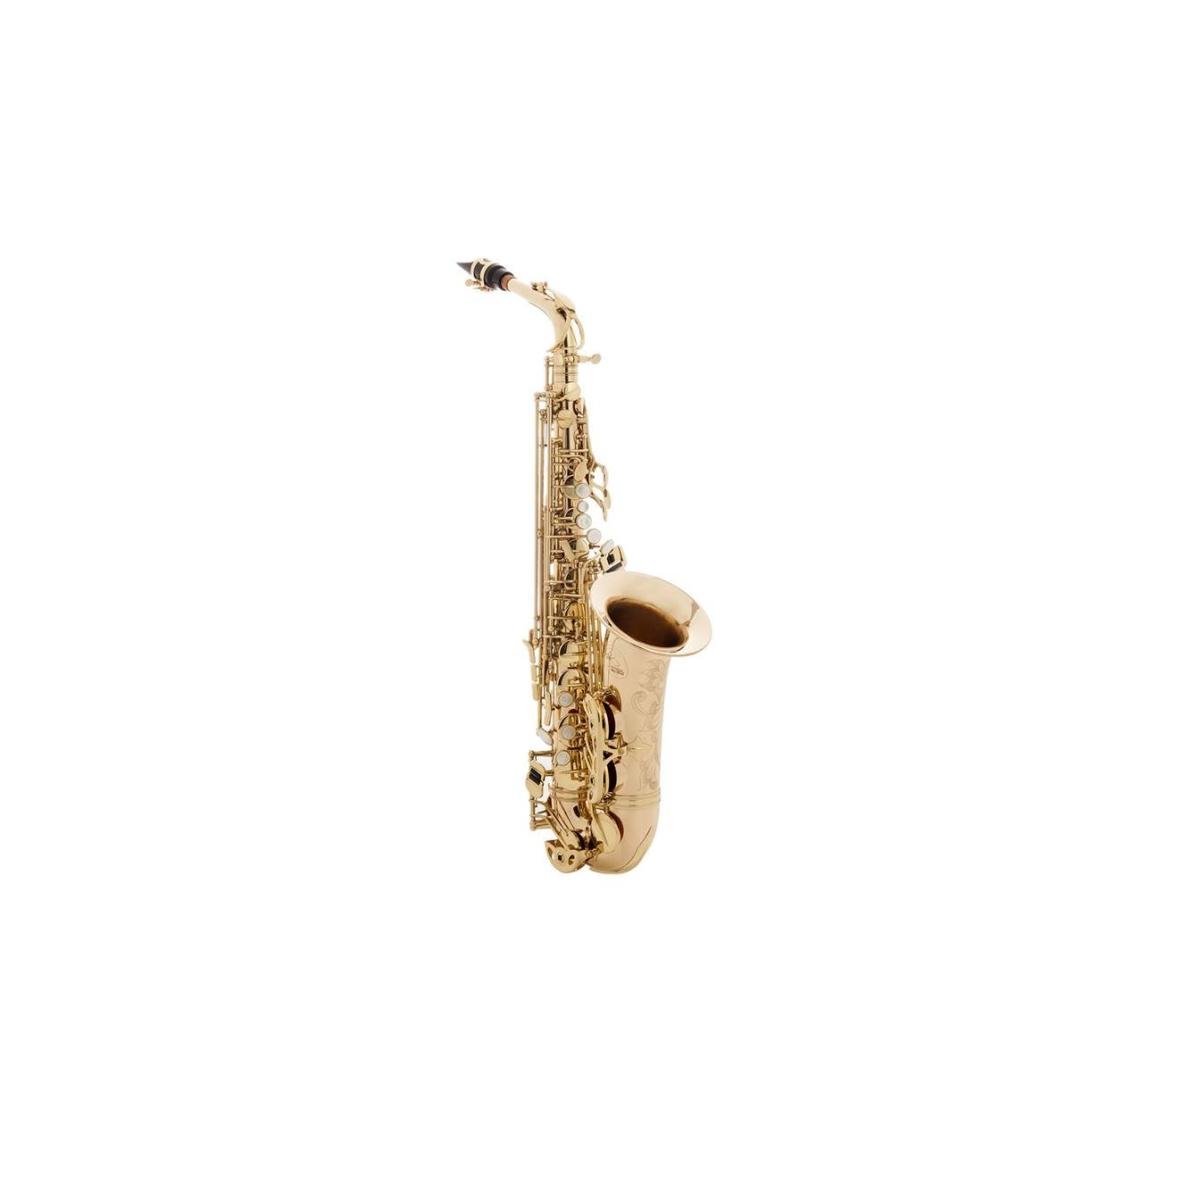 Borgani sax alto Royal Winds Pro bronzo